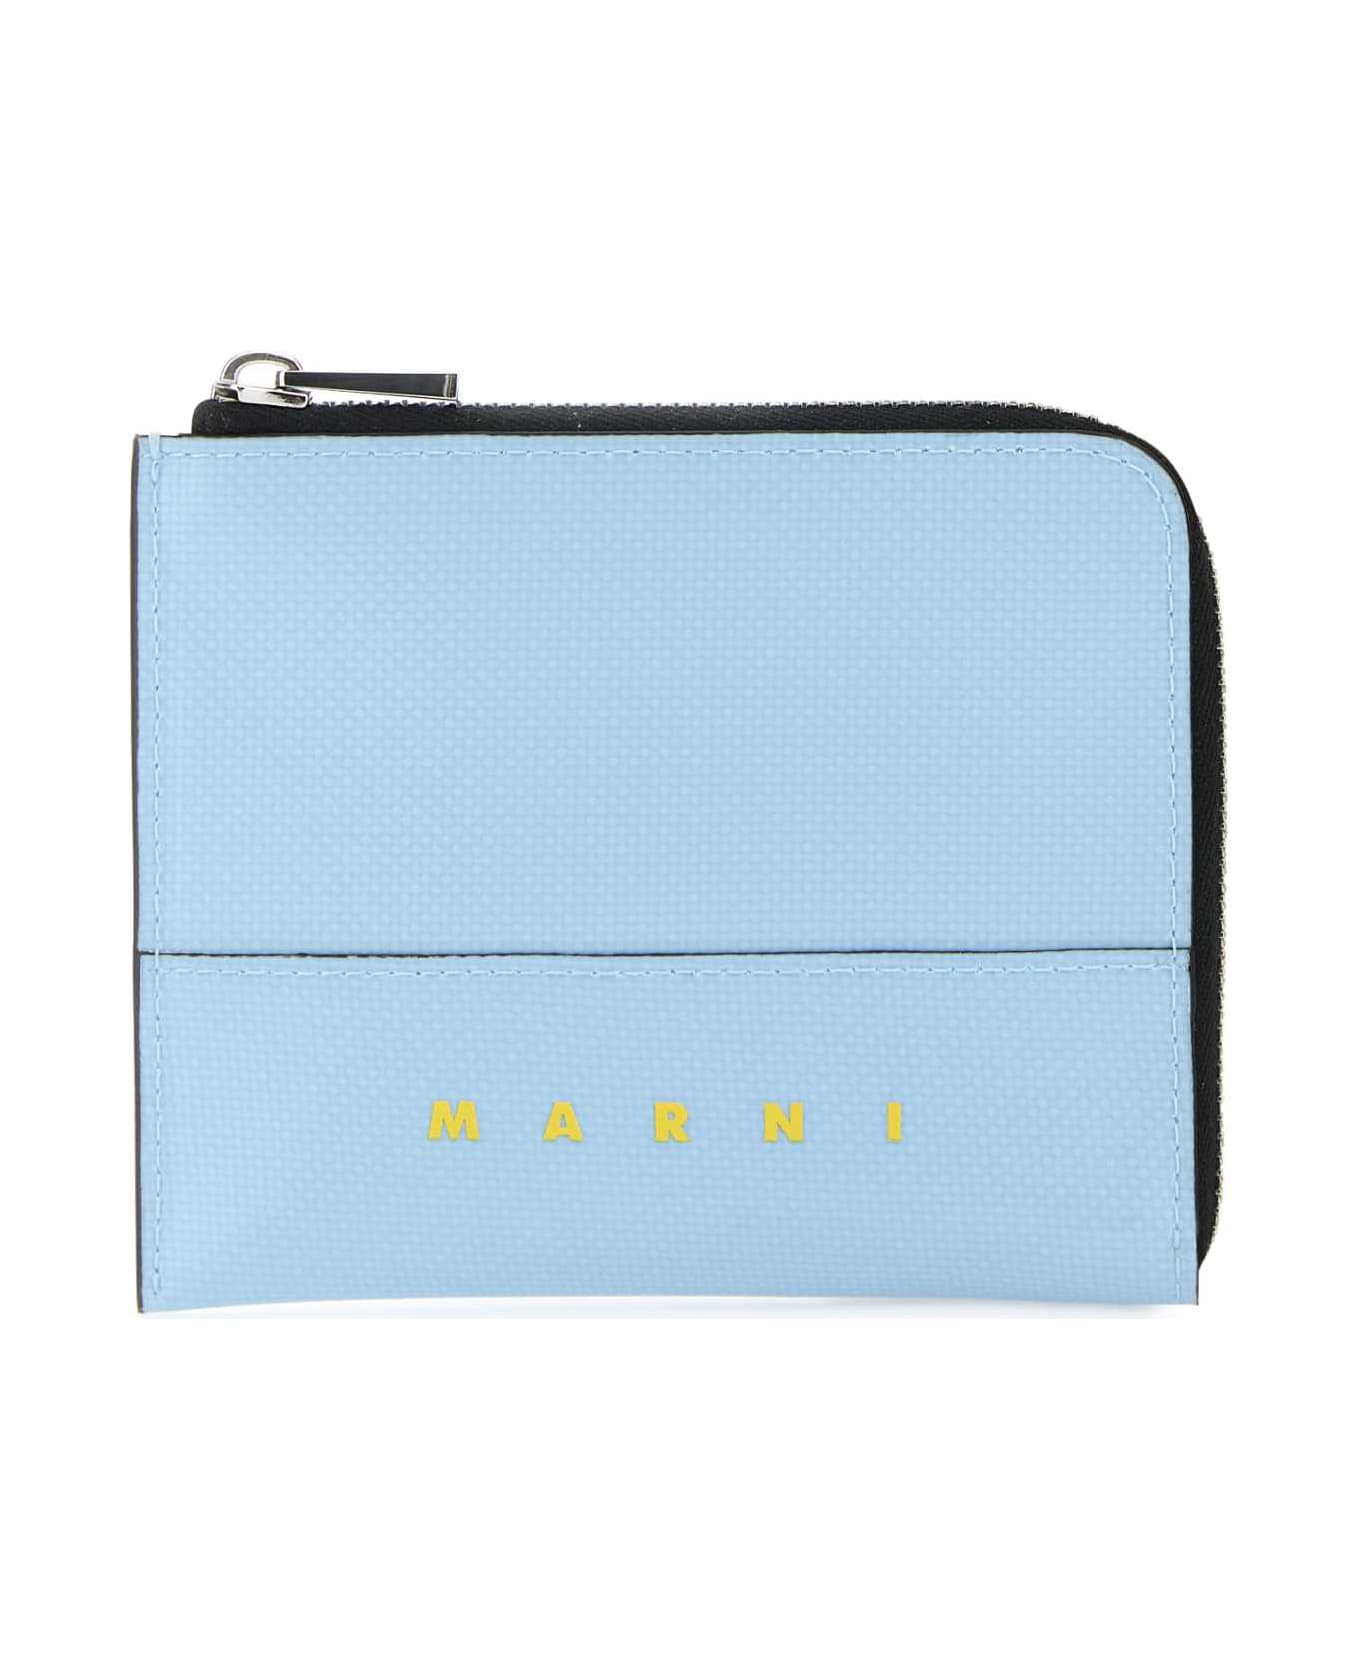 Marni Light-blue Pvc Wallet - LIGHTBLUE 財布